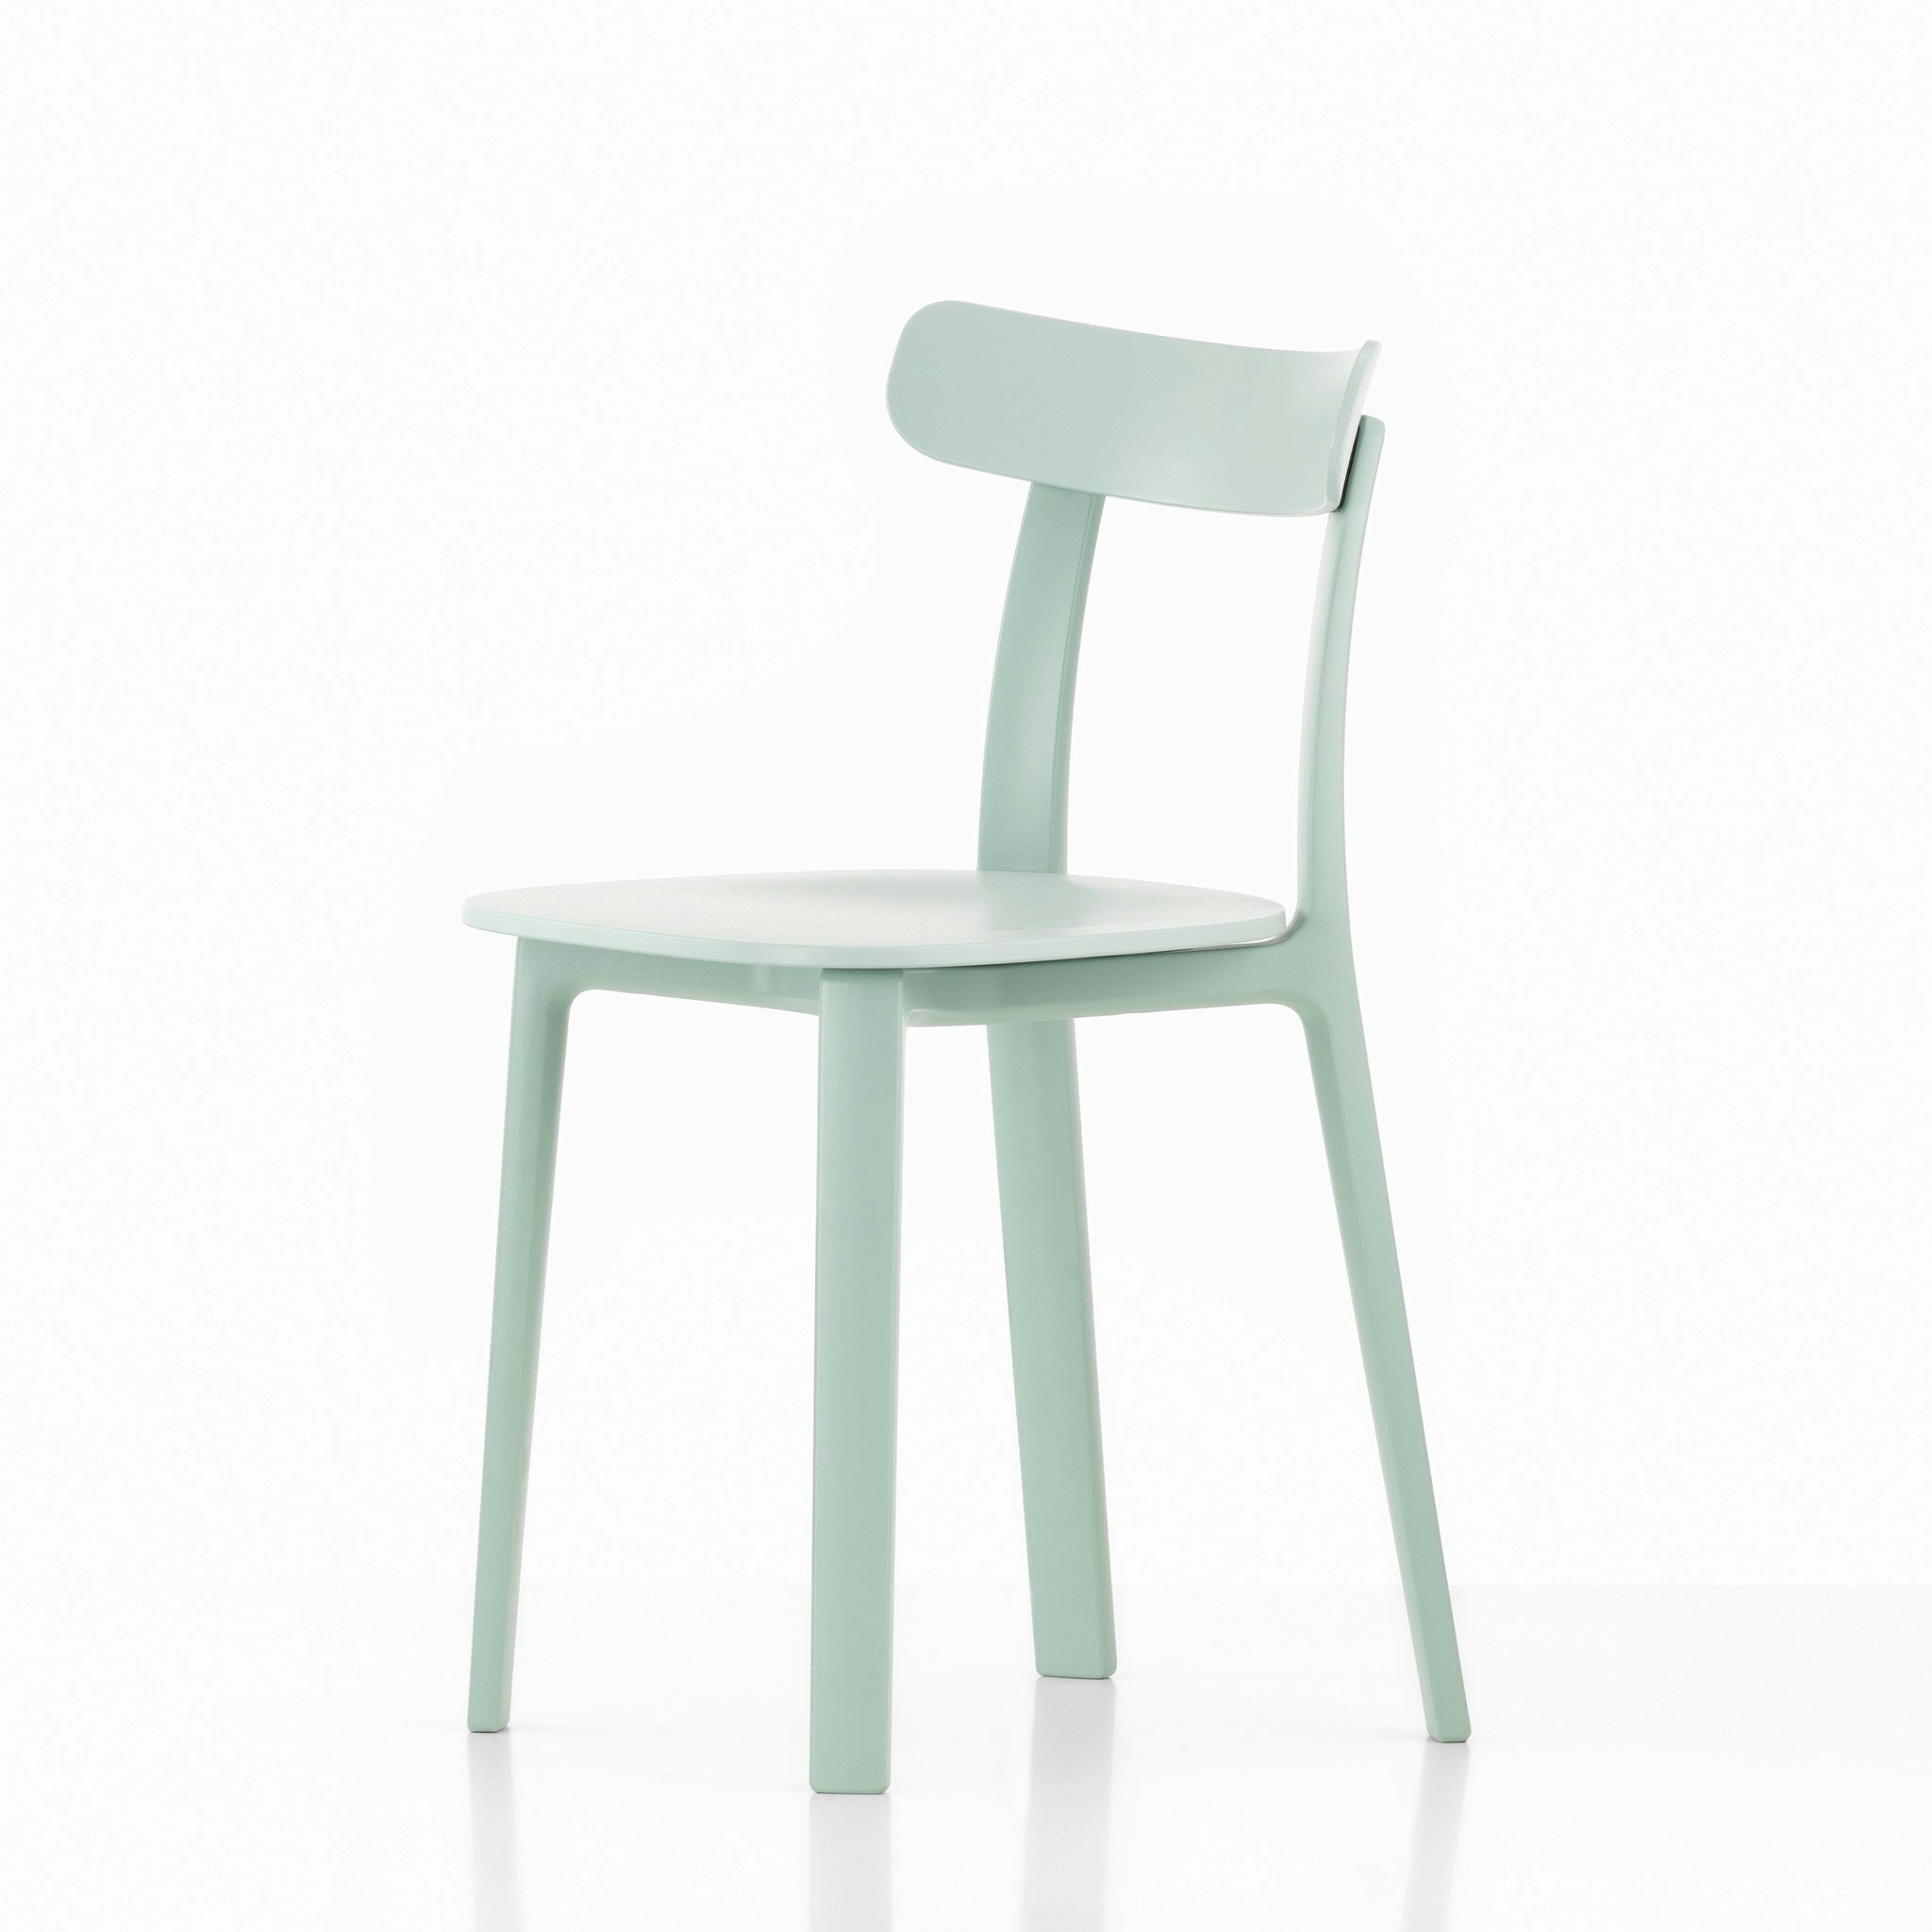 APC All Plastic Chair by Vitra